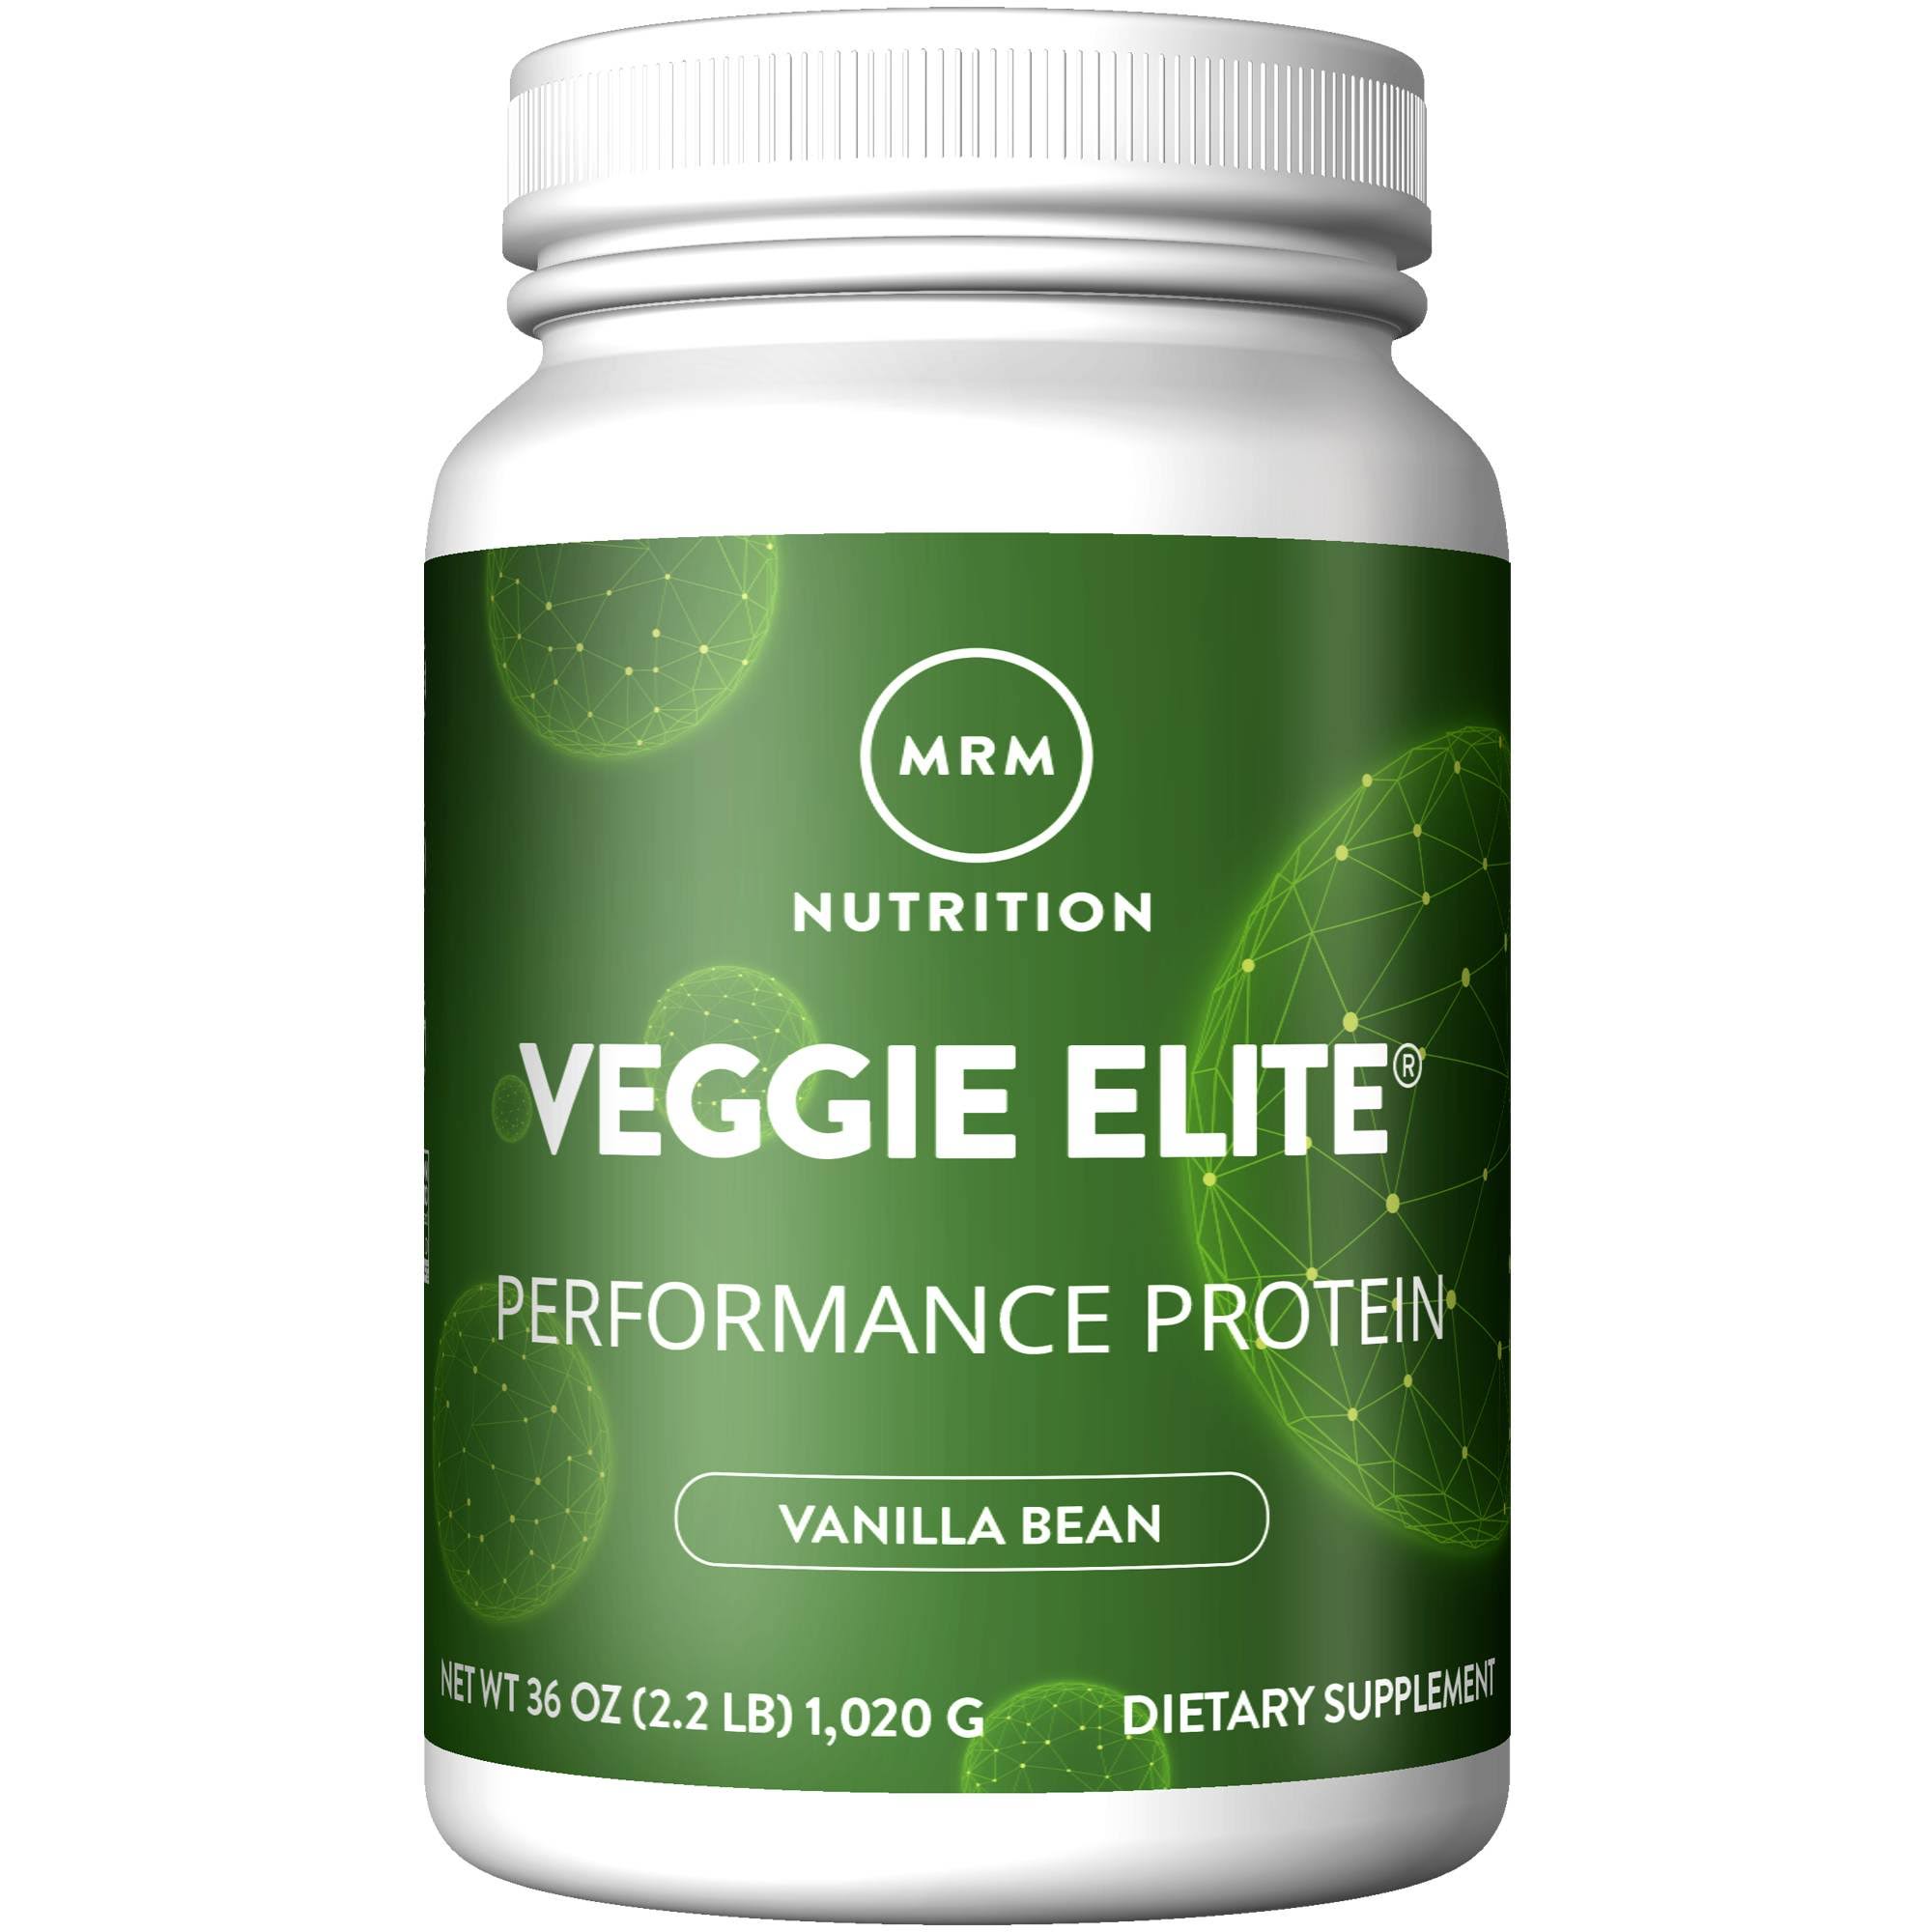 MRM Veggie Elite Dietary Supplement - Vanilla Bean, 2.2 lbs